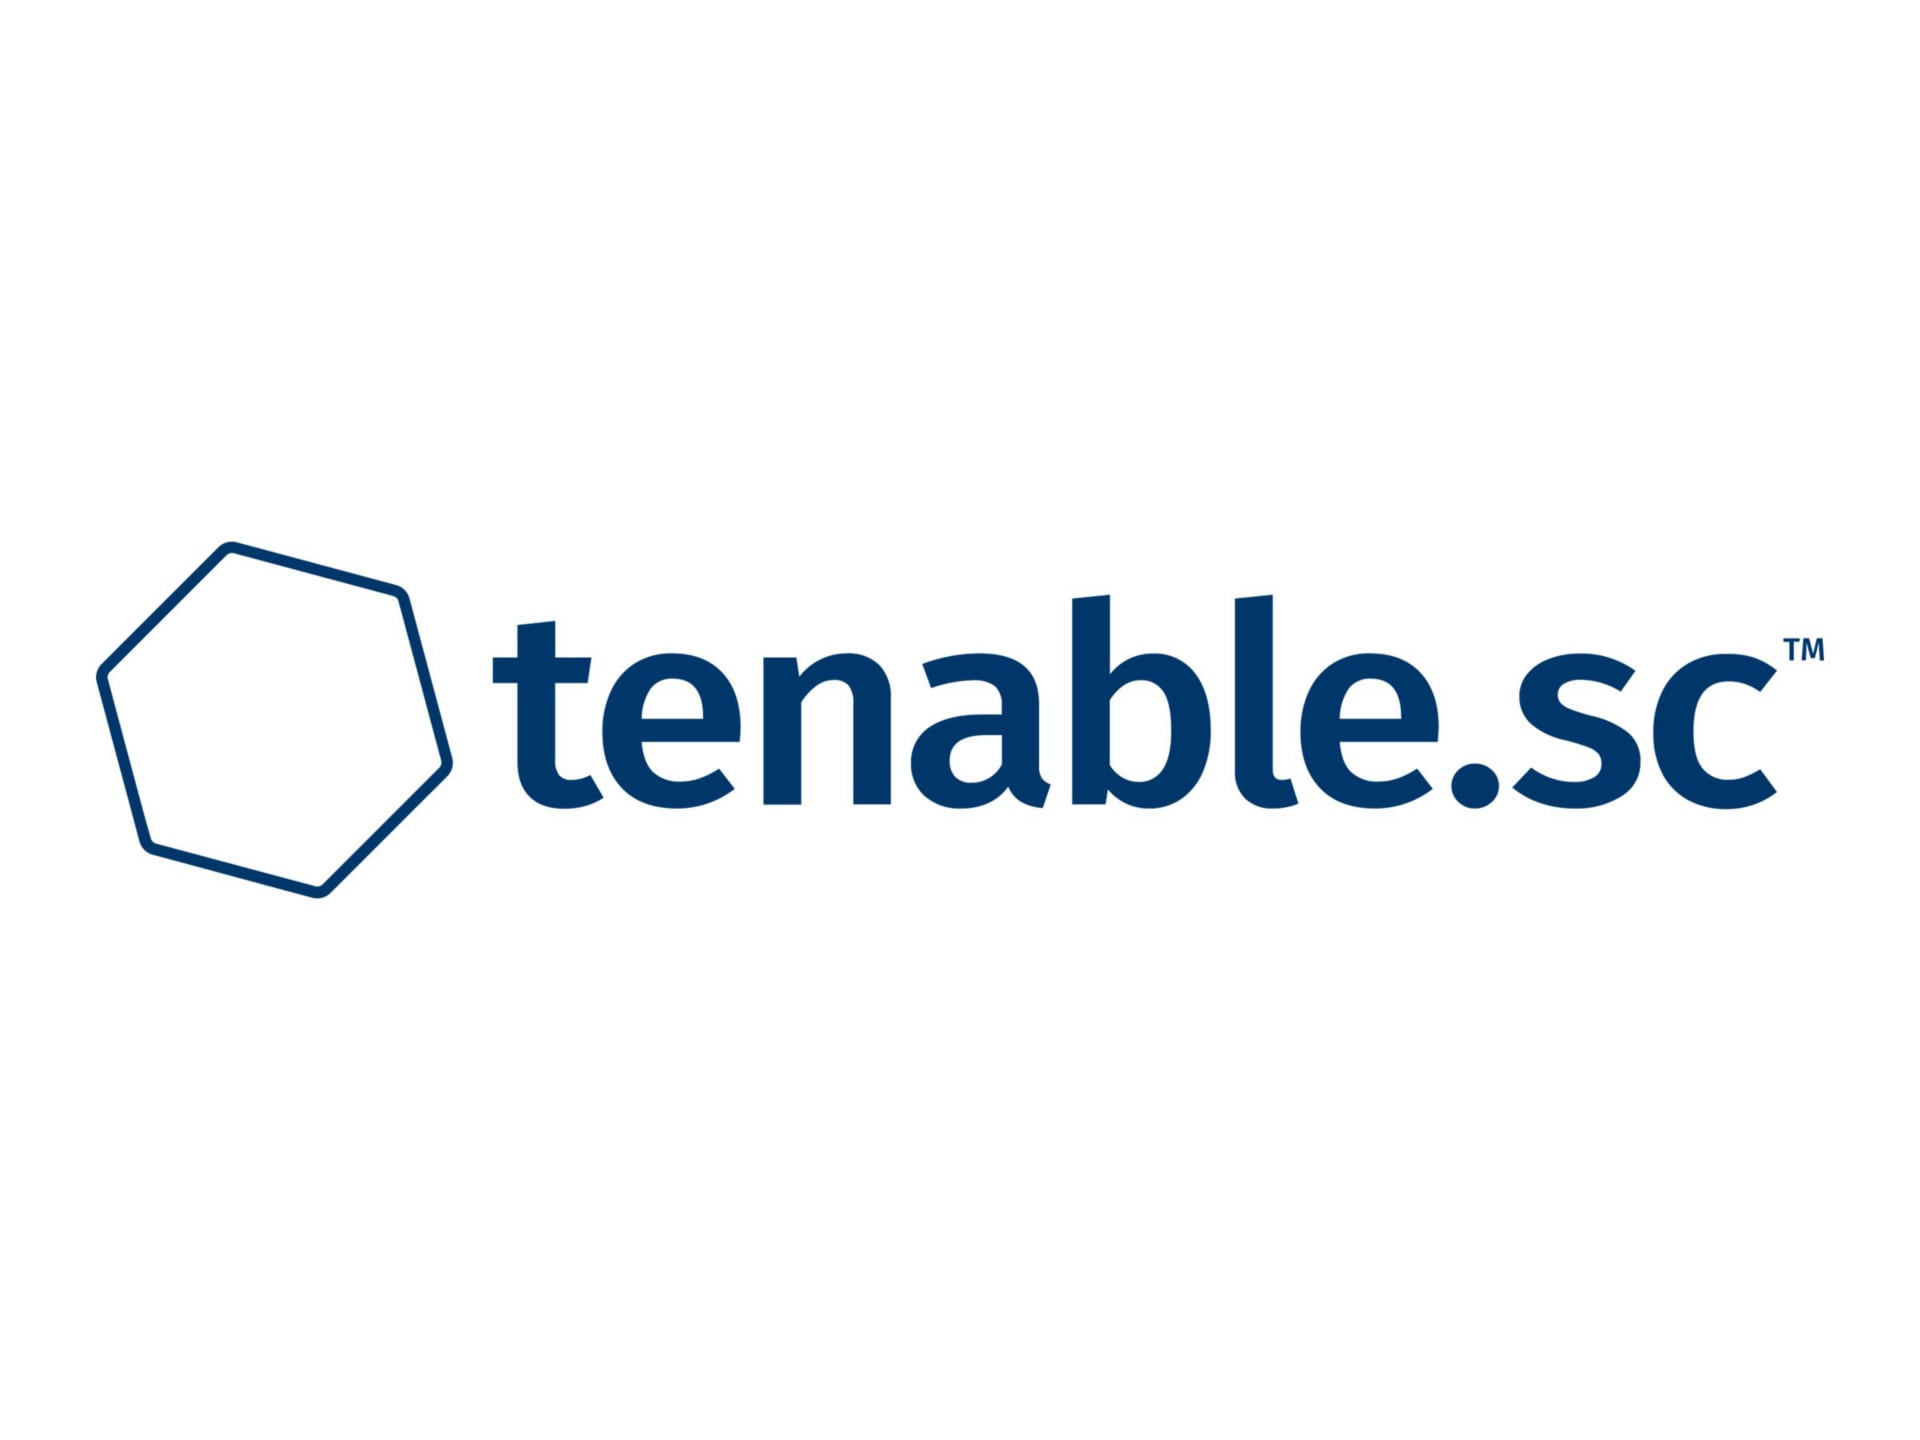 Tenable.sc - maintenance - 1 standard console